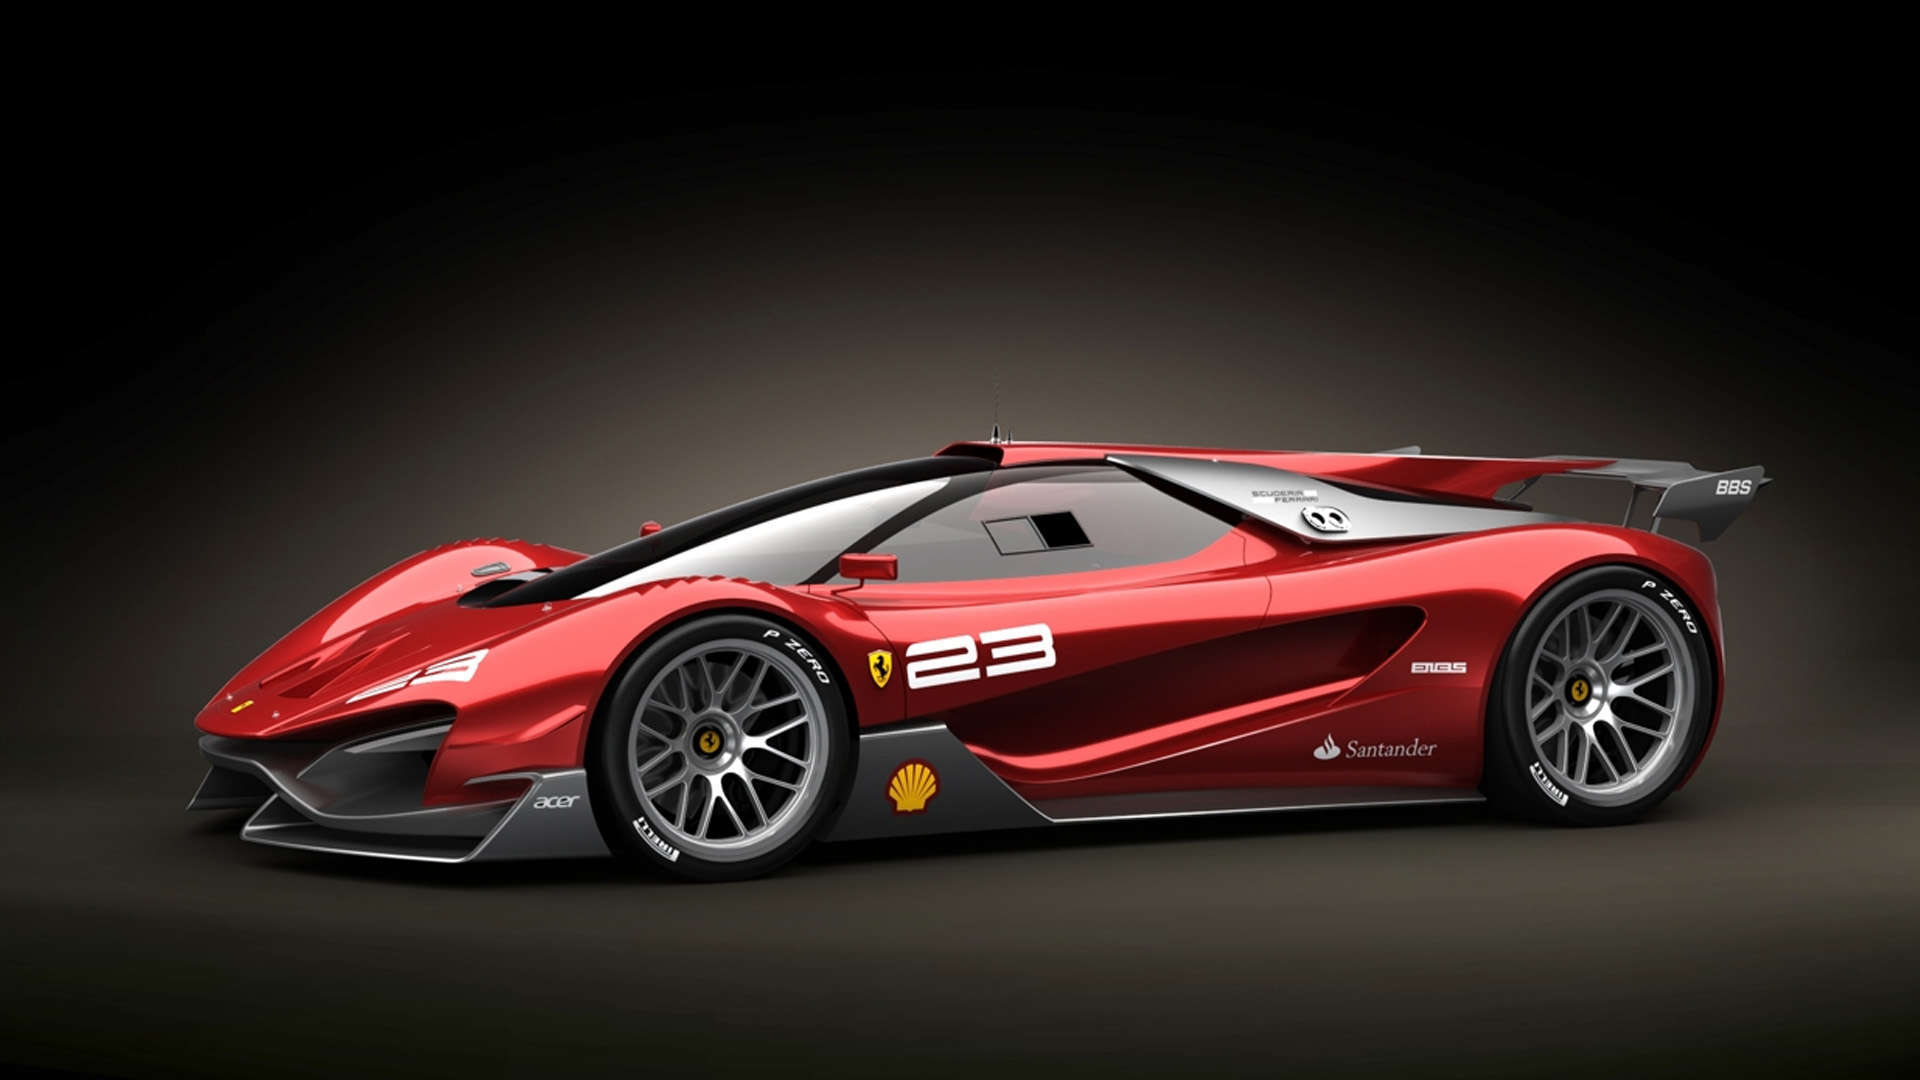 Ferrari Wallpaper Hd 1080p - image